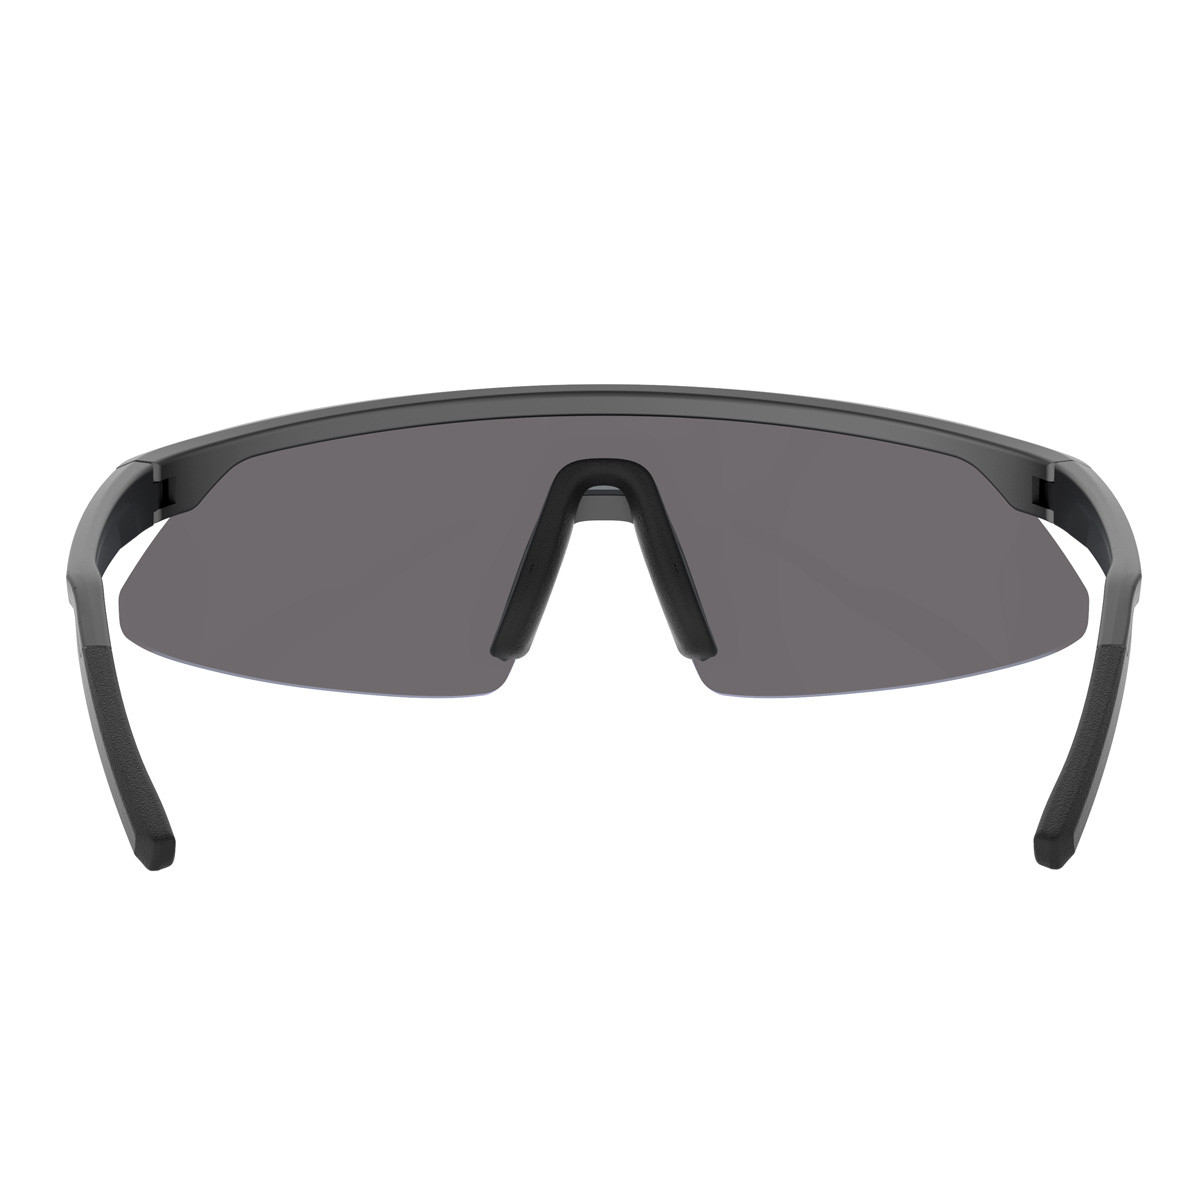 New Bolle Sunglasses are Here - Escondido Eyecare